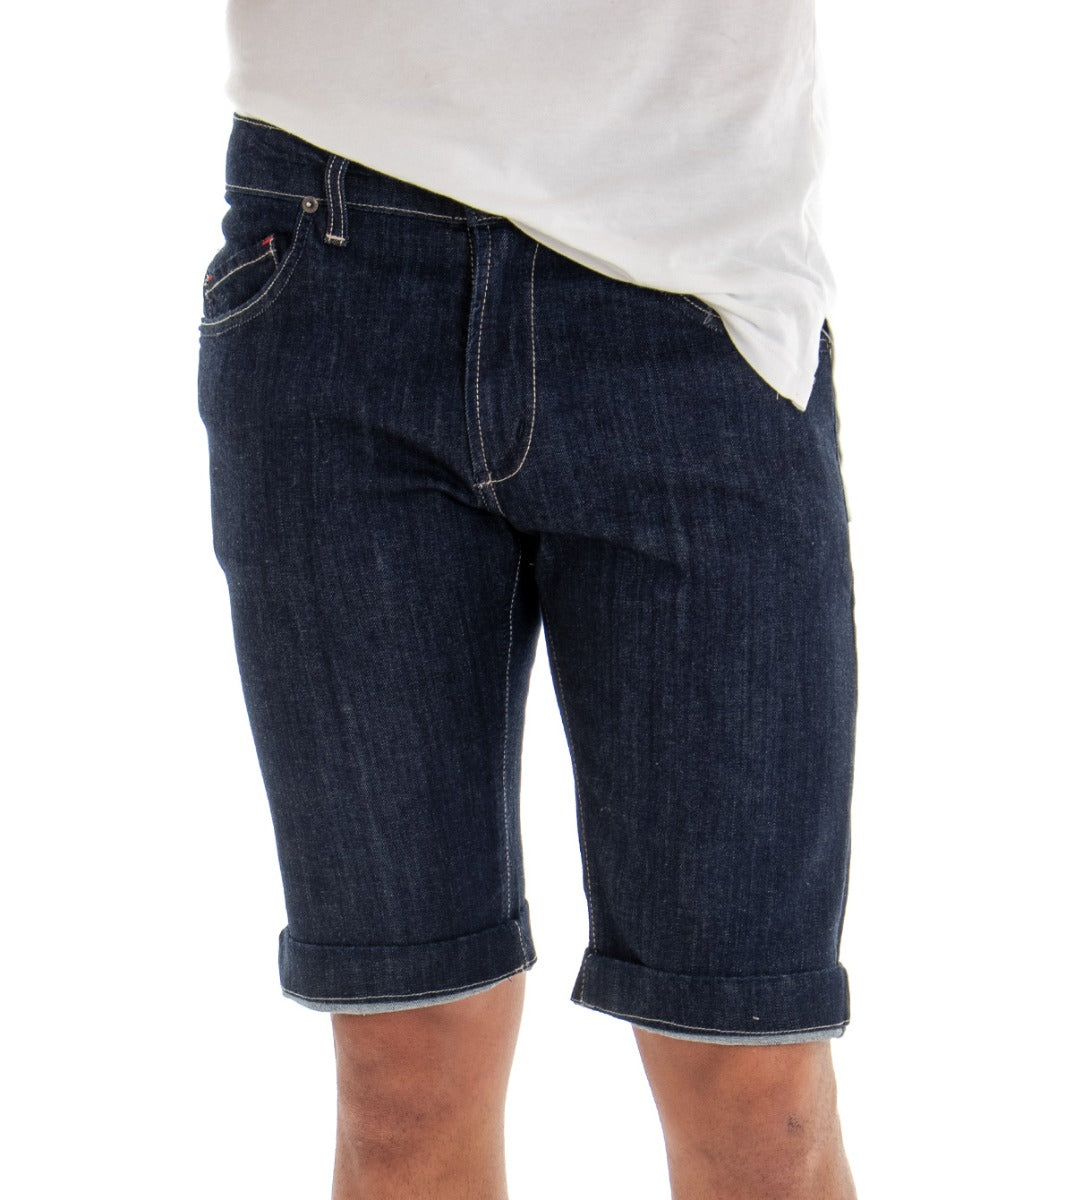 Bermuda Shorts Men's Dark Denim Jeans Slim Fit Five Pockets Basic GIOSAL-PC1576A